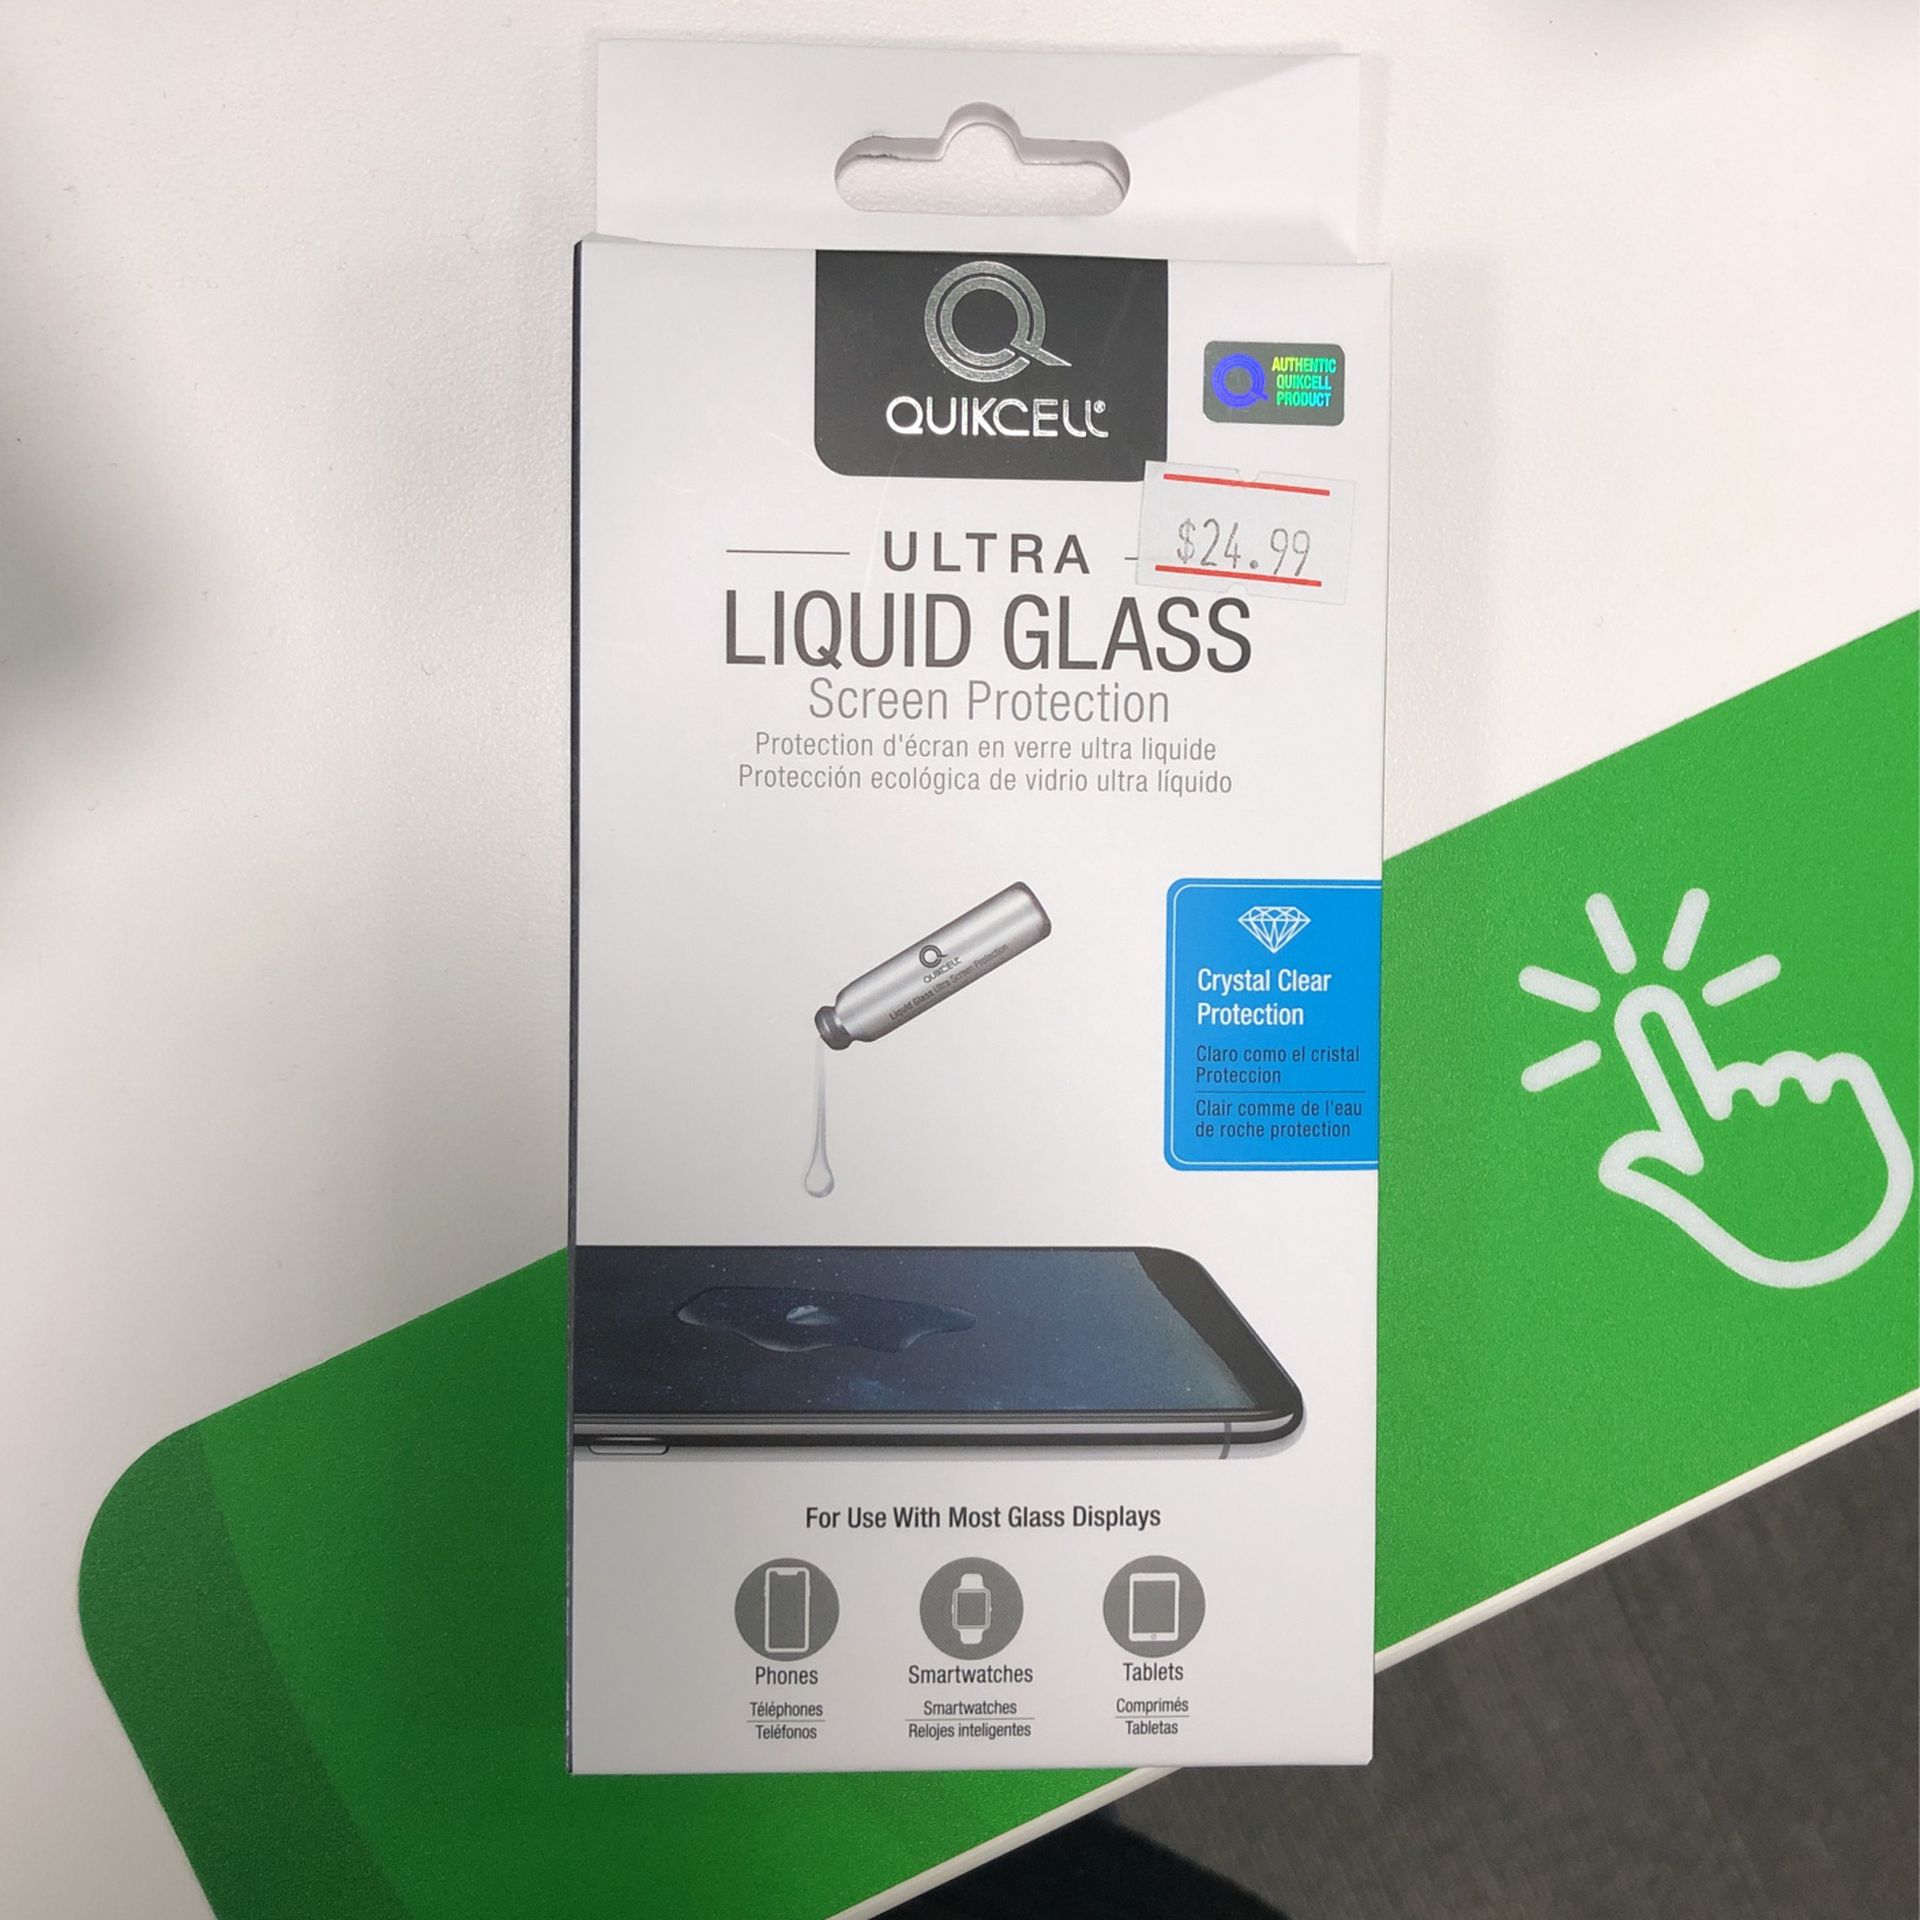 Save $10 On Ultra Liquid Glass